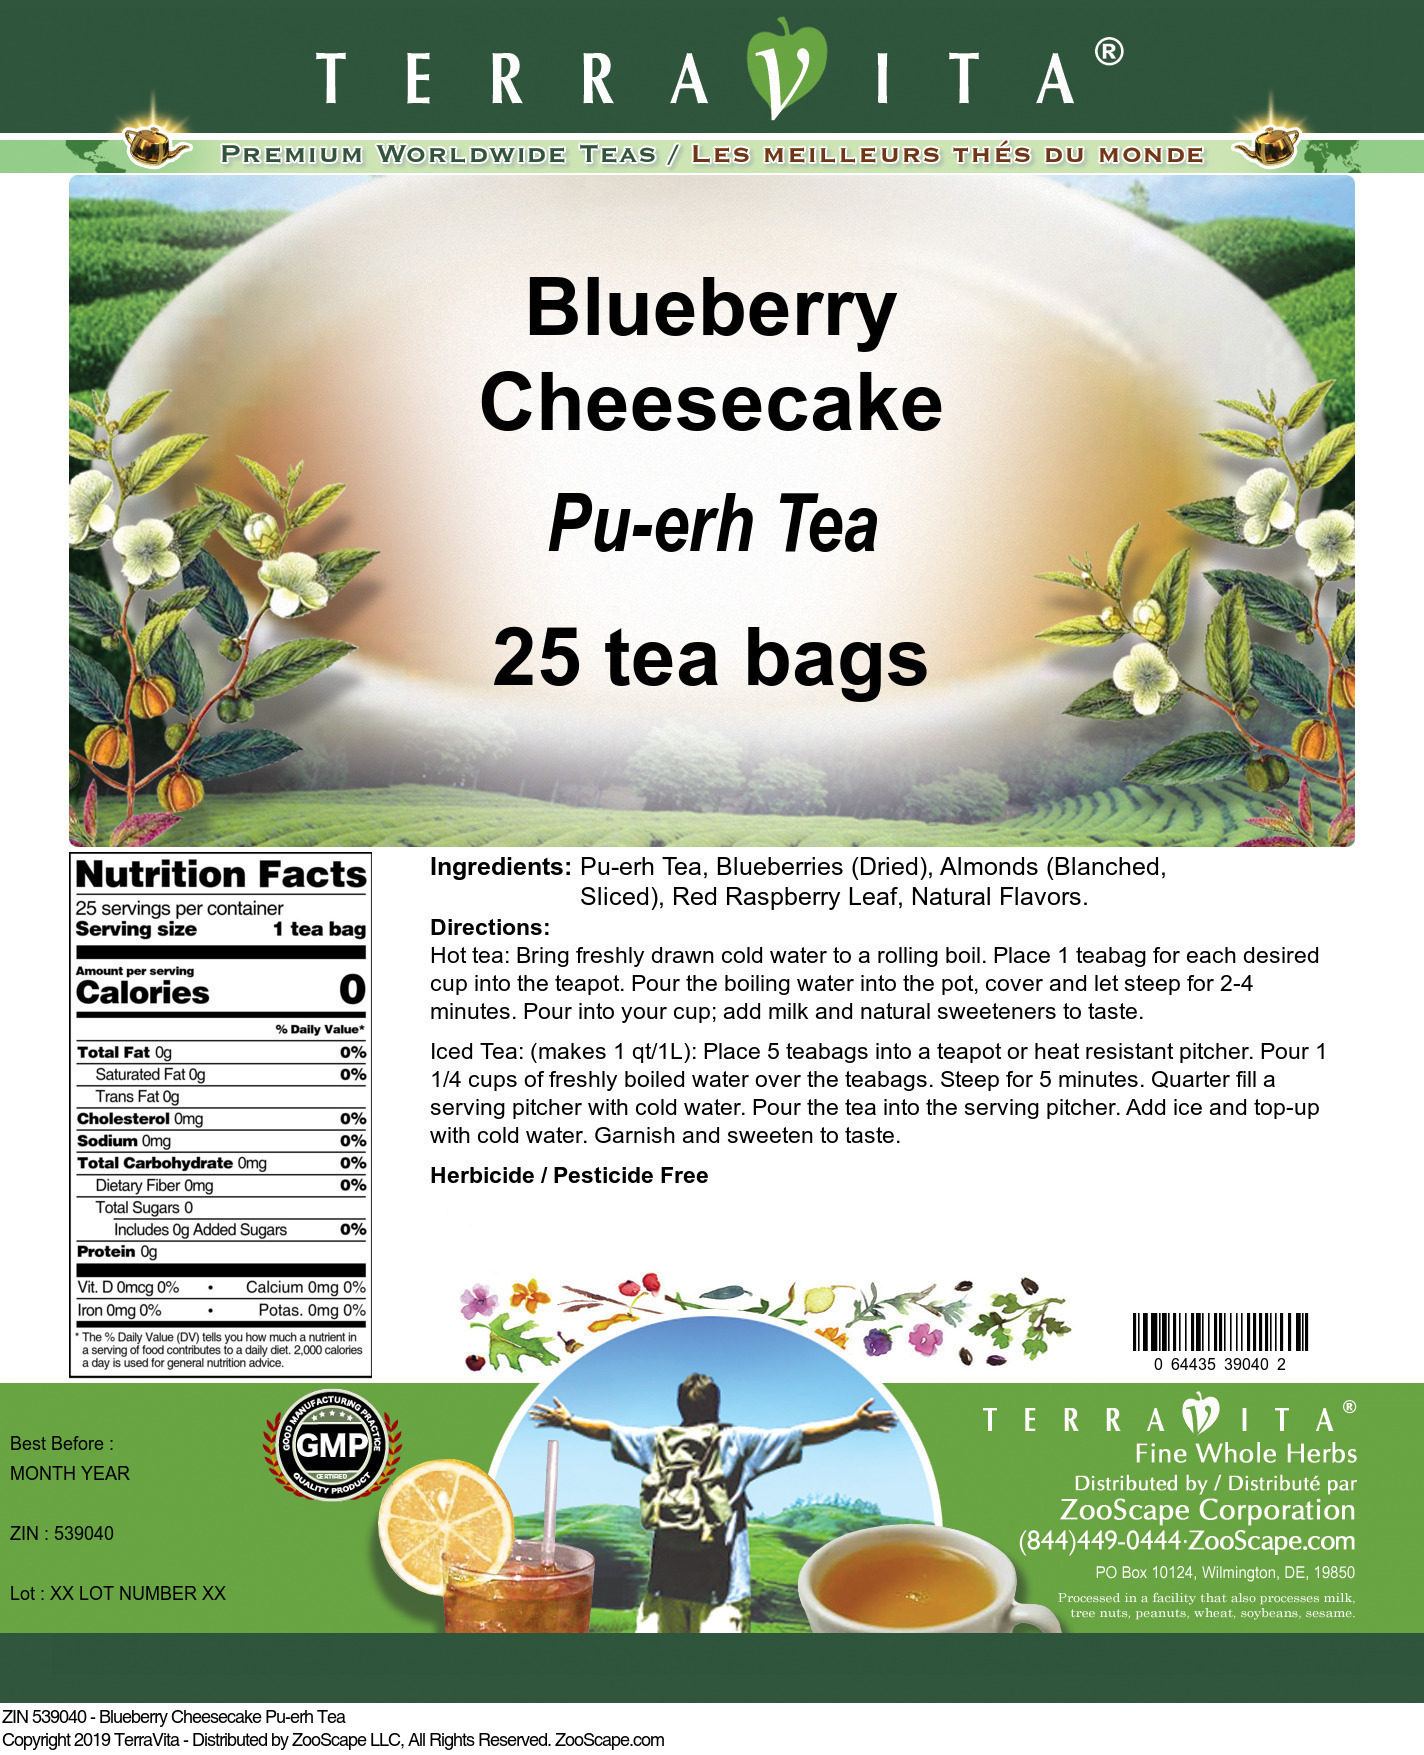 Blueberry Cheesecake Pu-erh Tea - Label